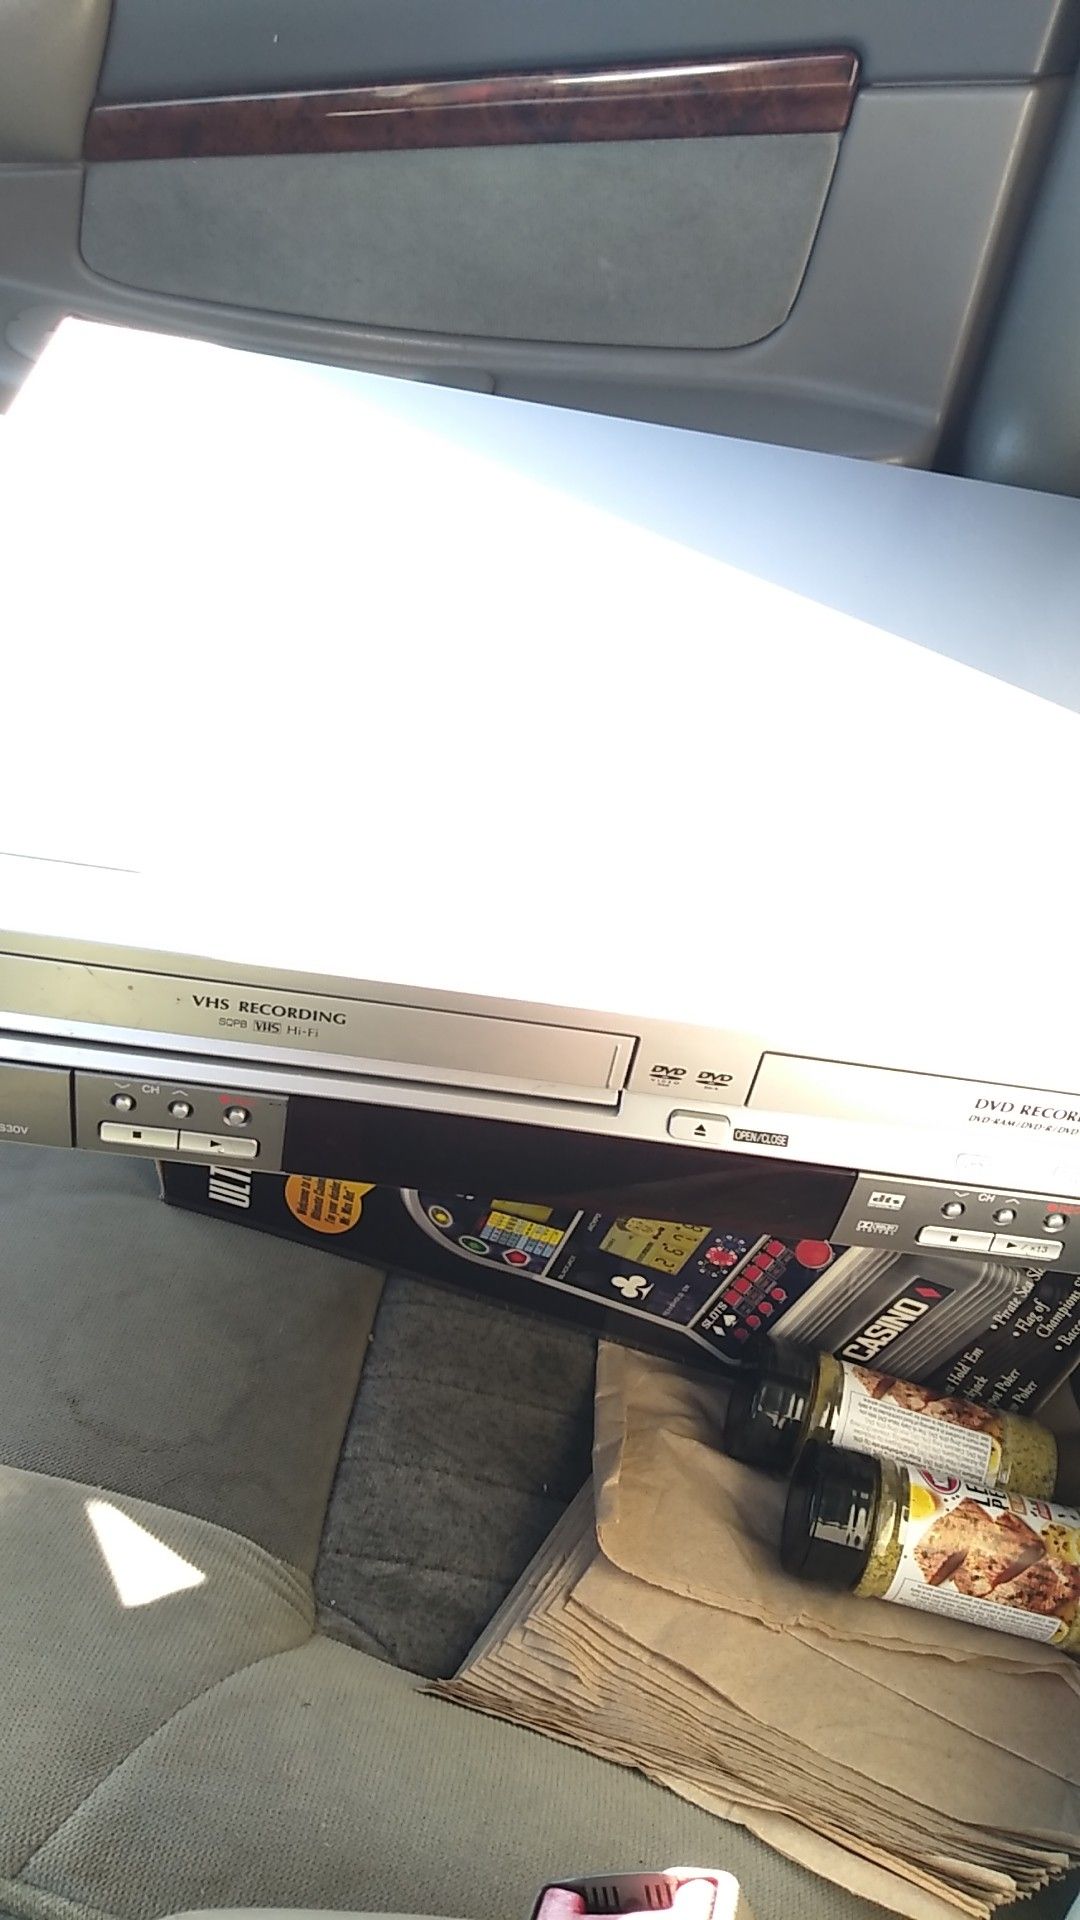 Panasonic VHS recorder DVD recorder combo